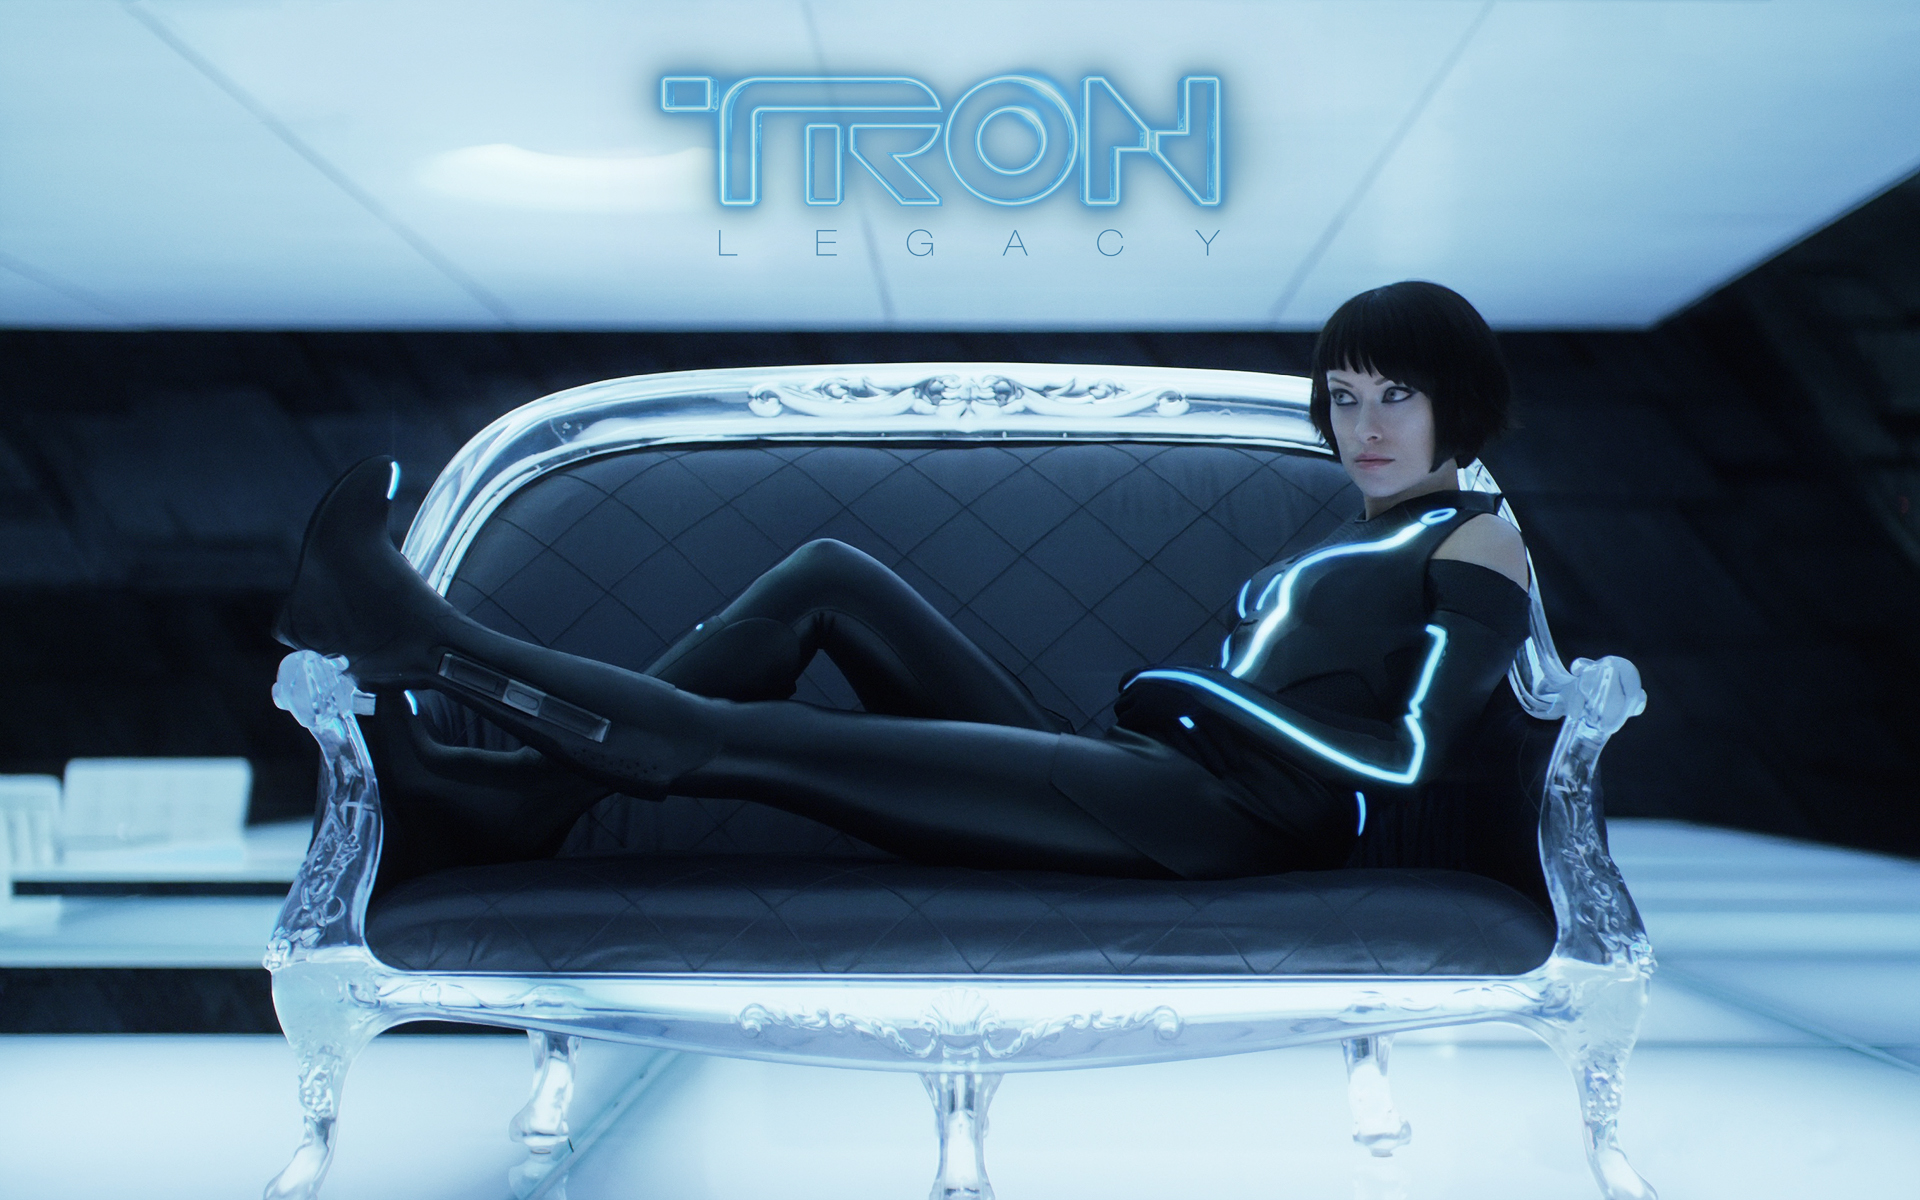 Olivia Wilde, Tron, Tron Legacy, Quorra - desktop wallpaper